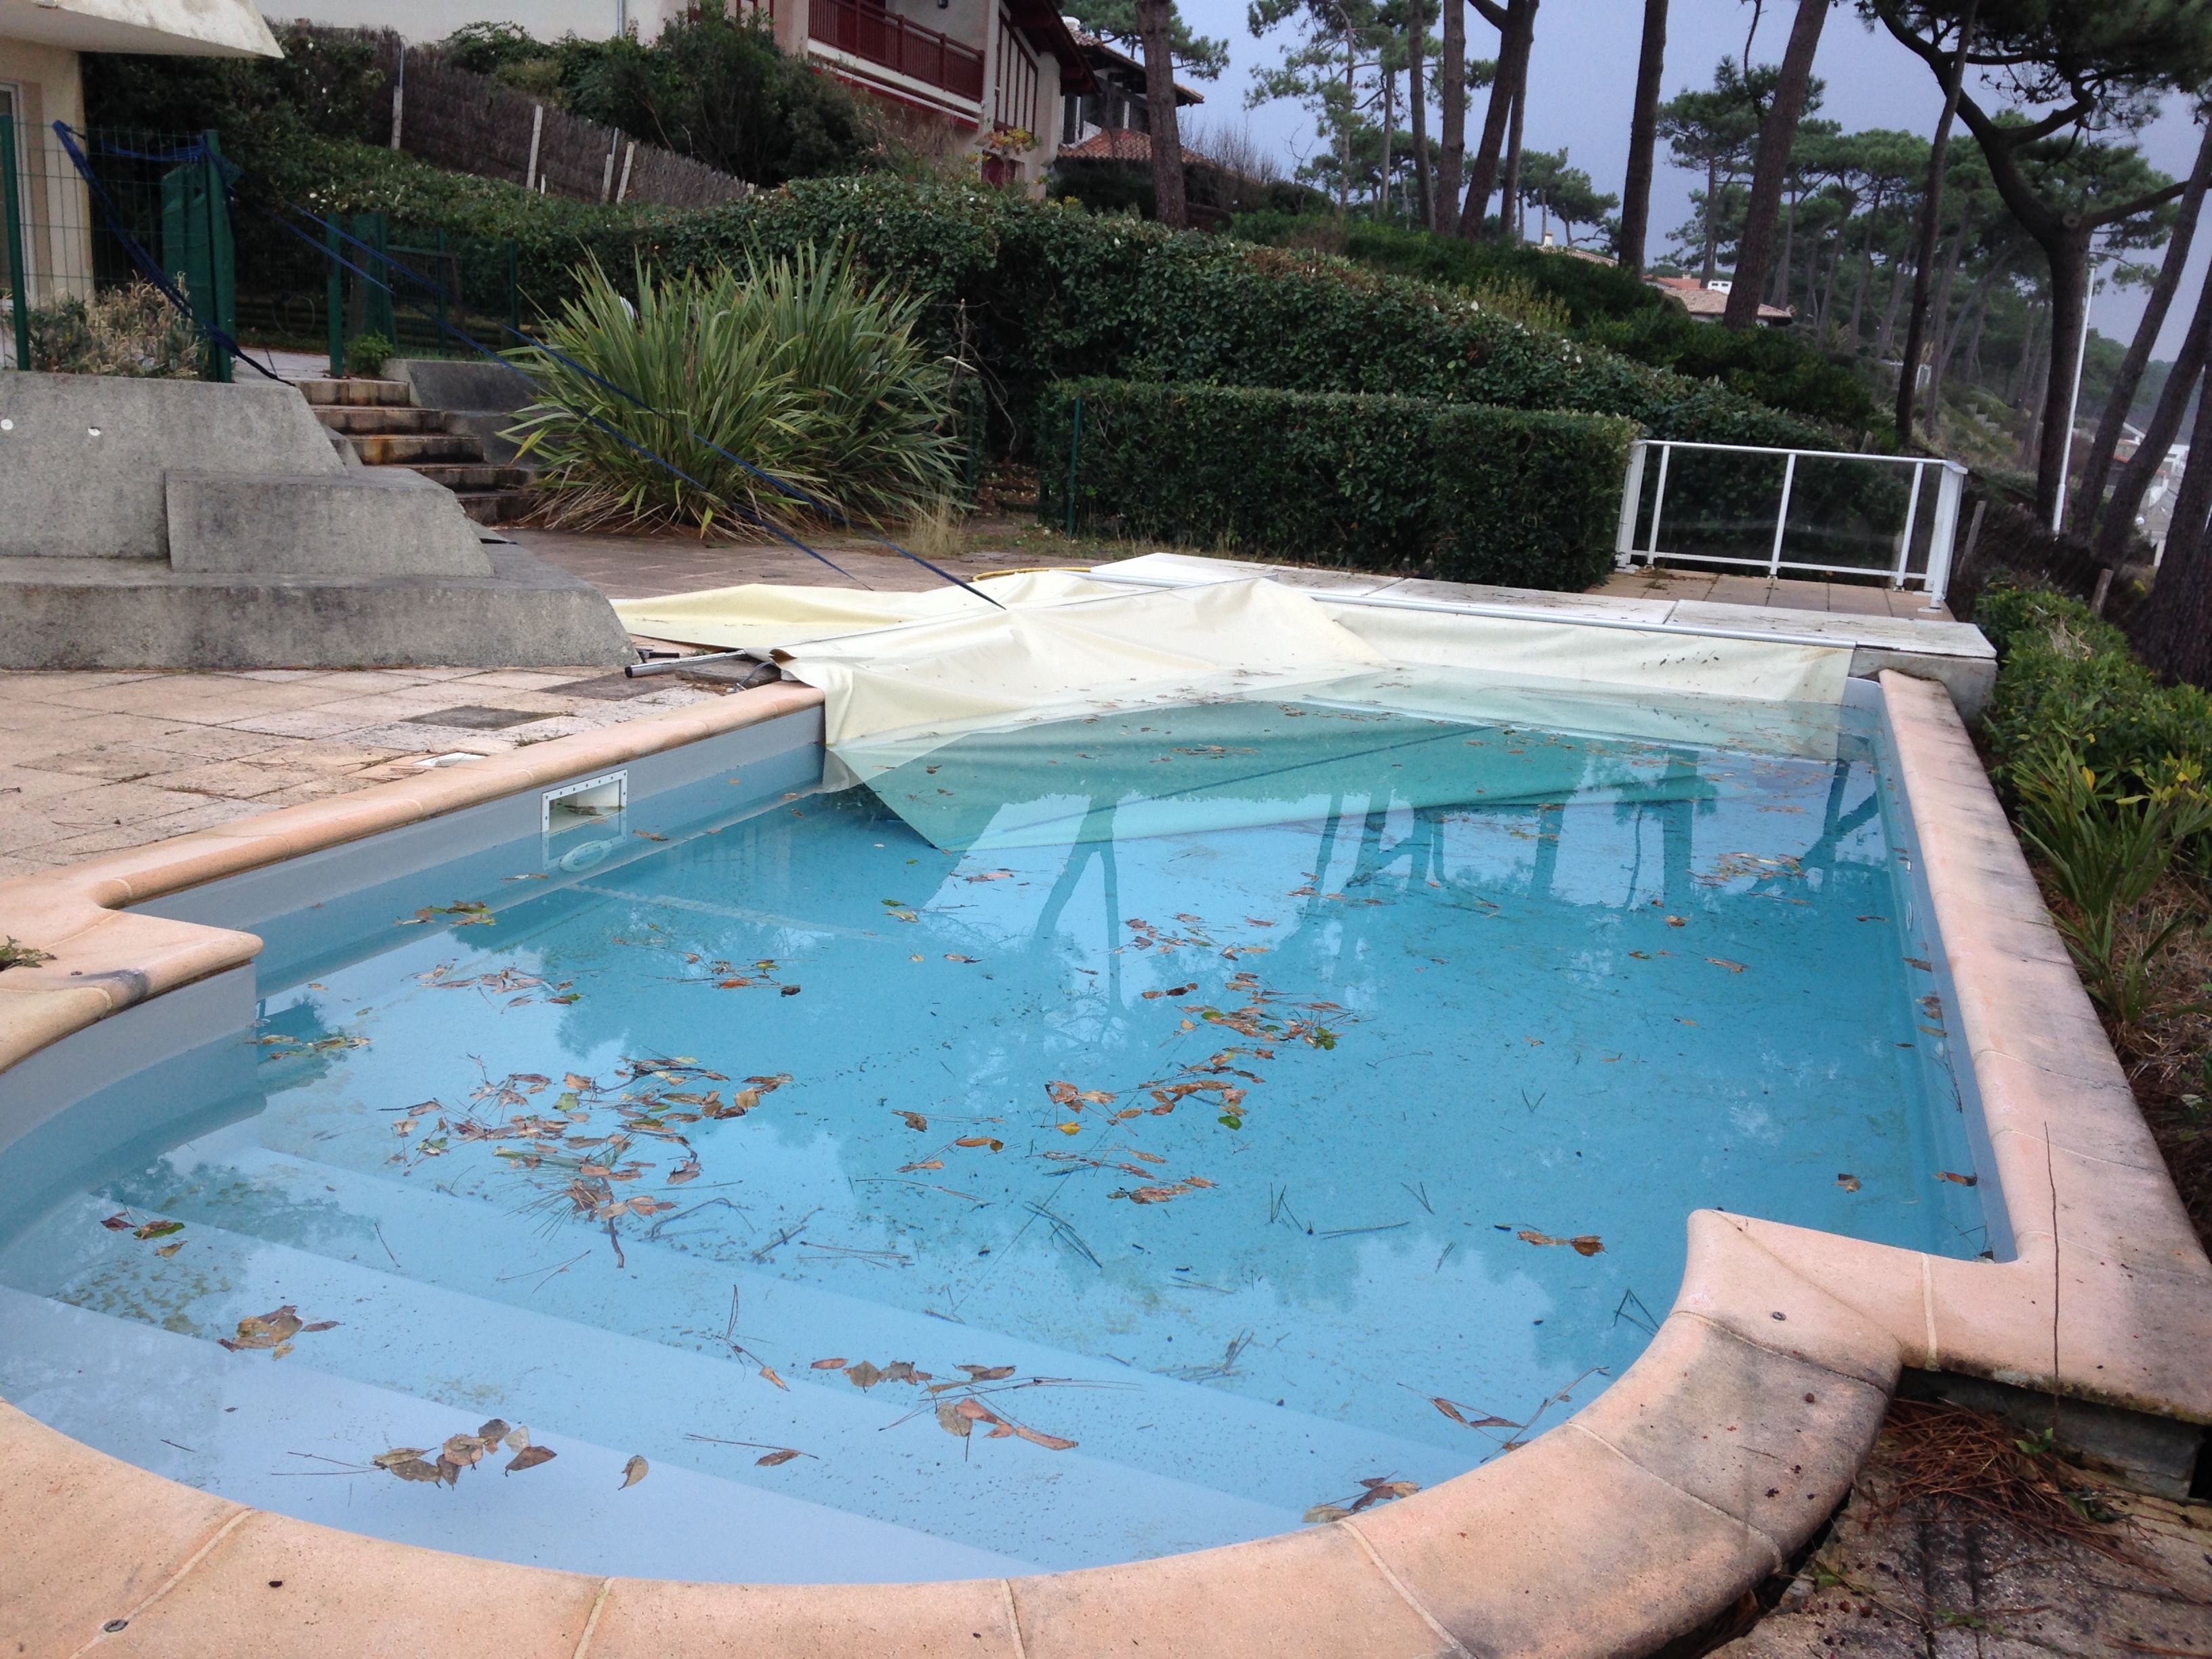 Trophees de la piscine 2020 Catégorie renovation piscine or - avant